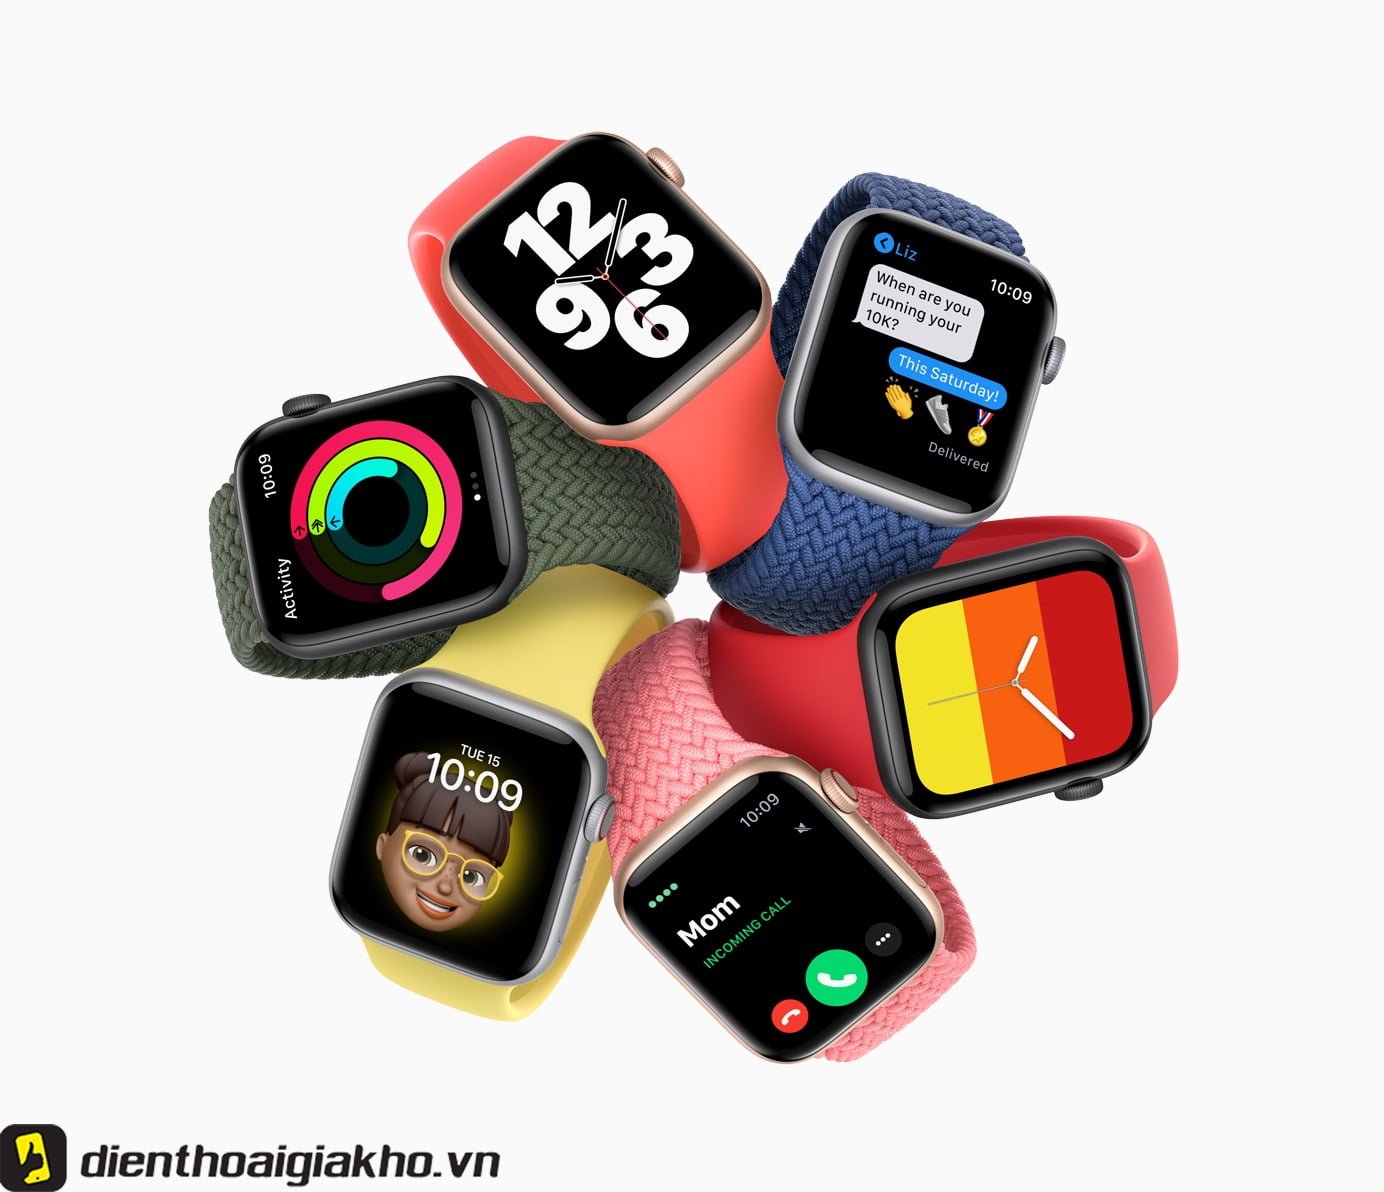 Apple Watch SE 40mm GPS Aluminum Case with Sport Band - Chính Hãng VN/A